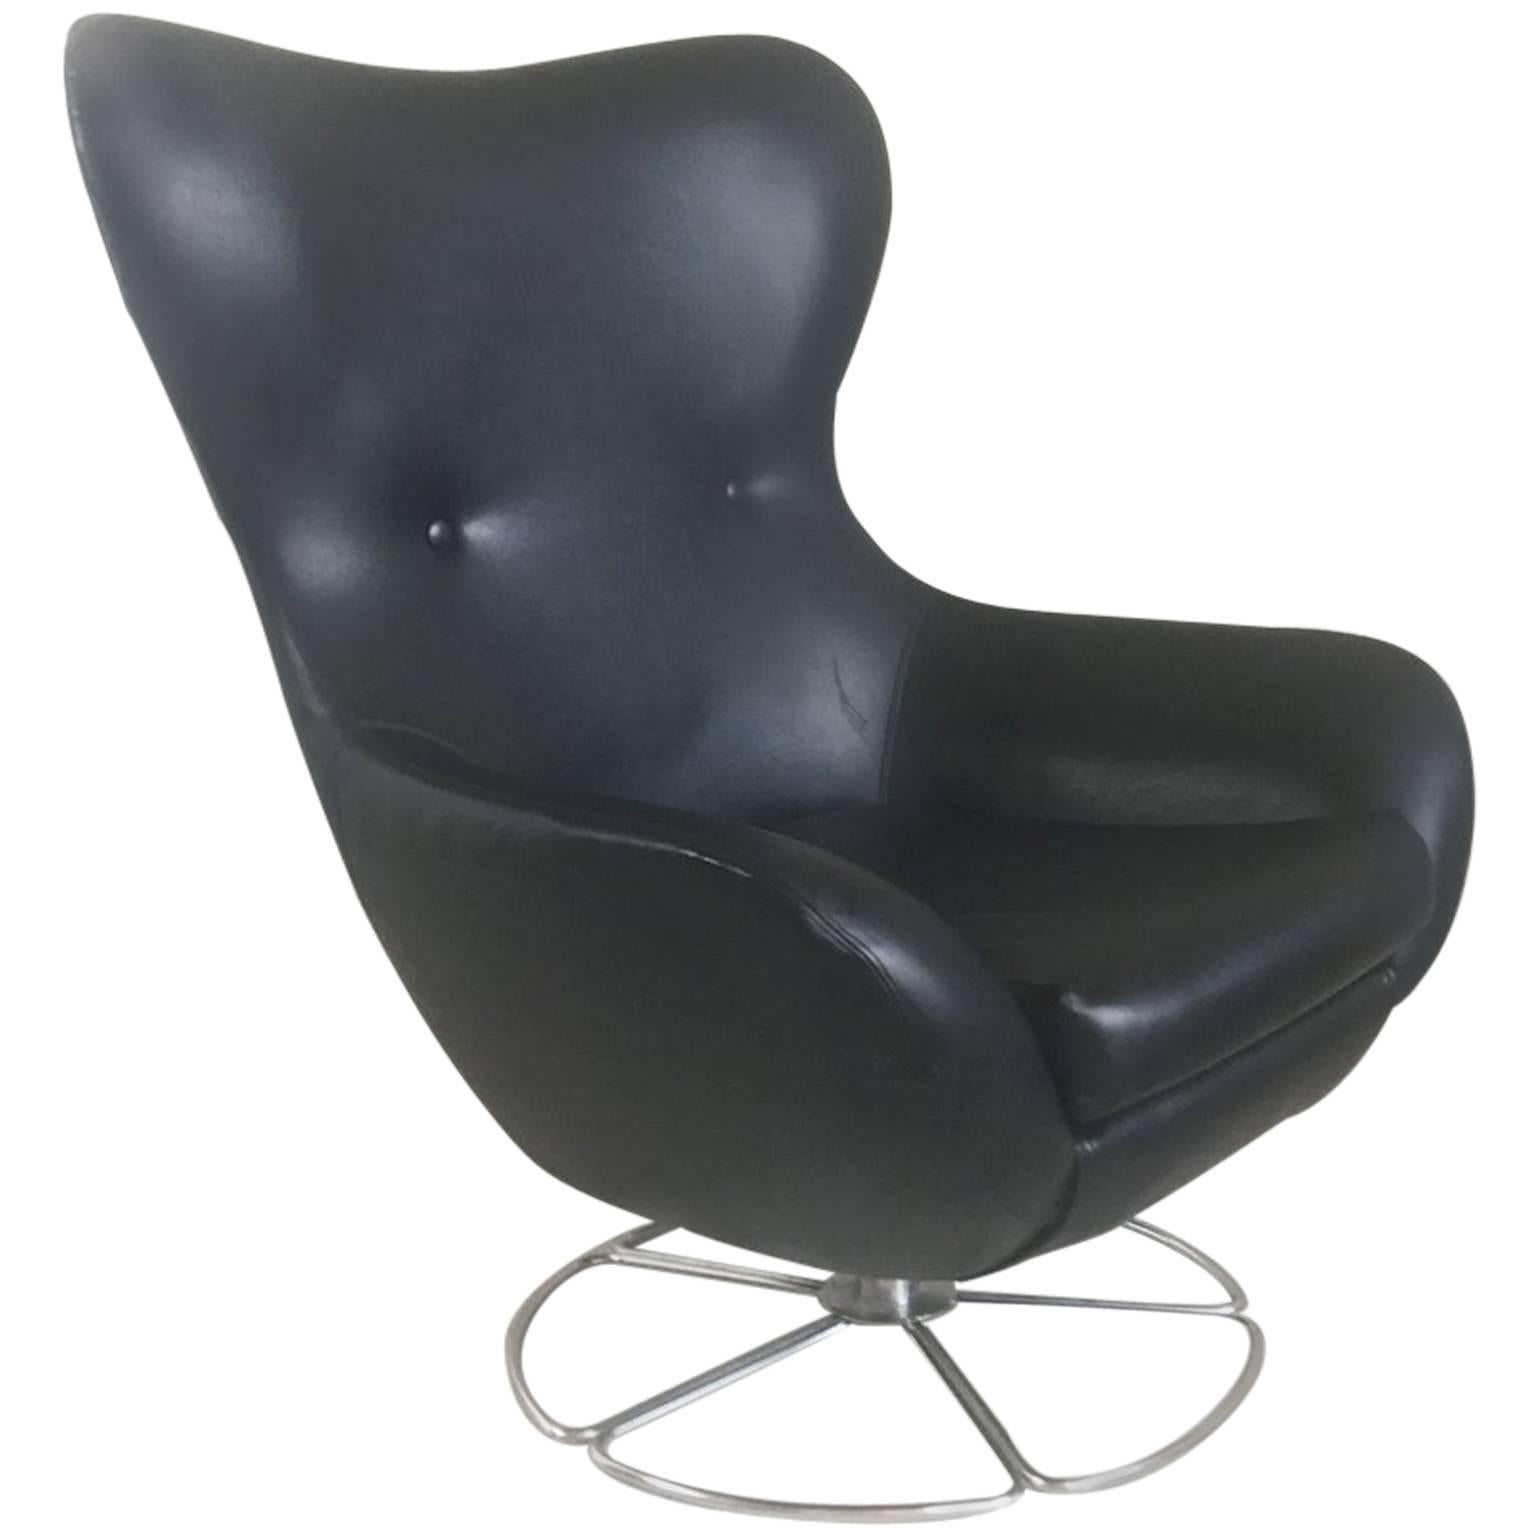 1970s Mid-Century Large Black Vinyl Lounge Chair For Sale